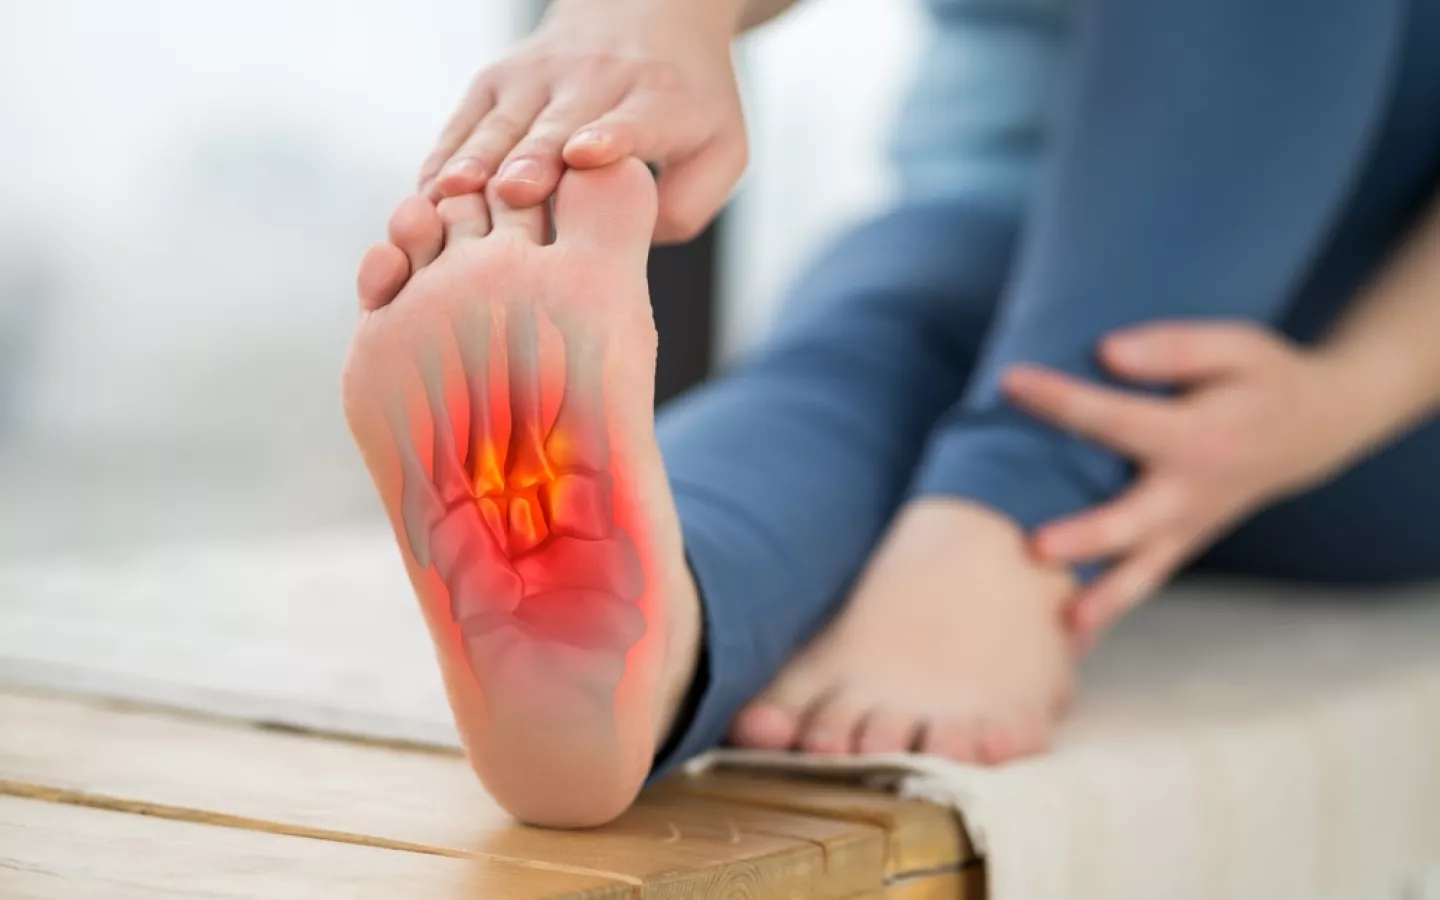 Diagnostic de l'arthrose : la douleur un symptôme de l'arthrose